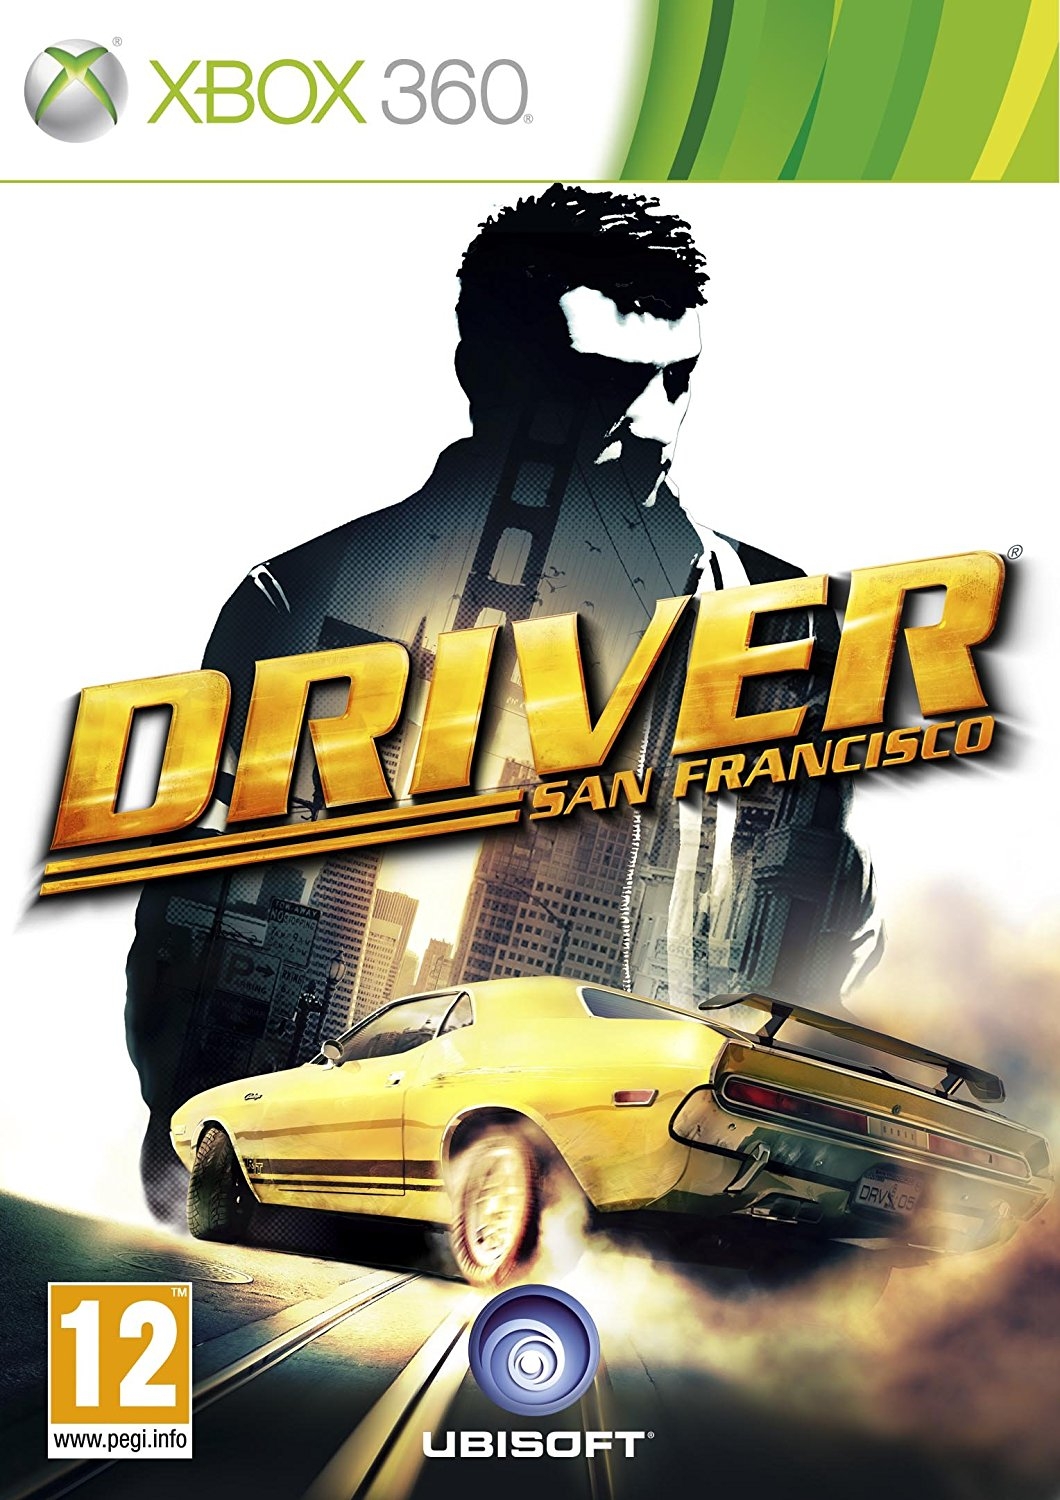 XBOX360 Driver San Francisco